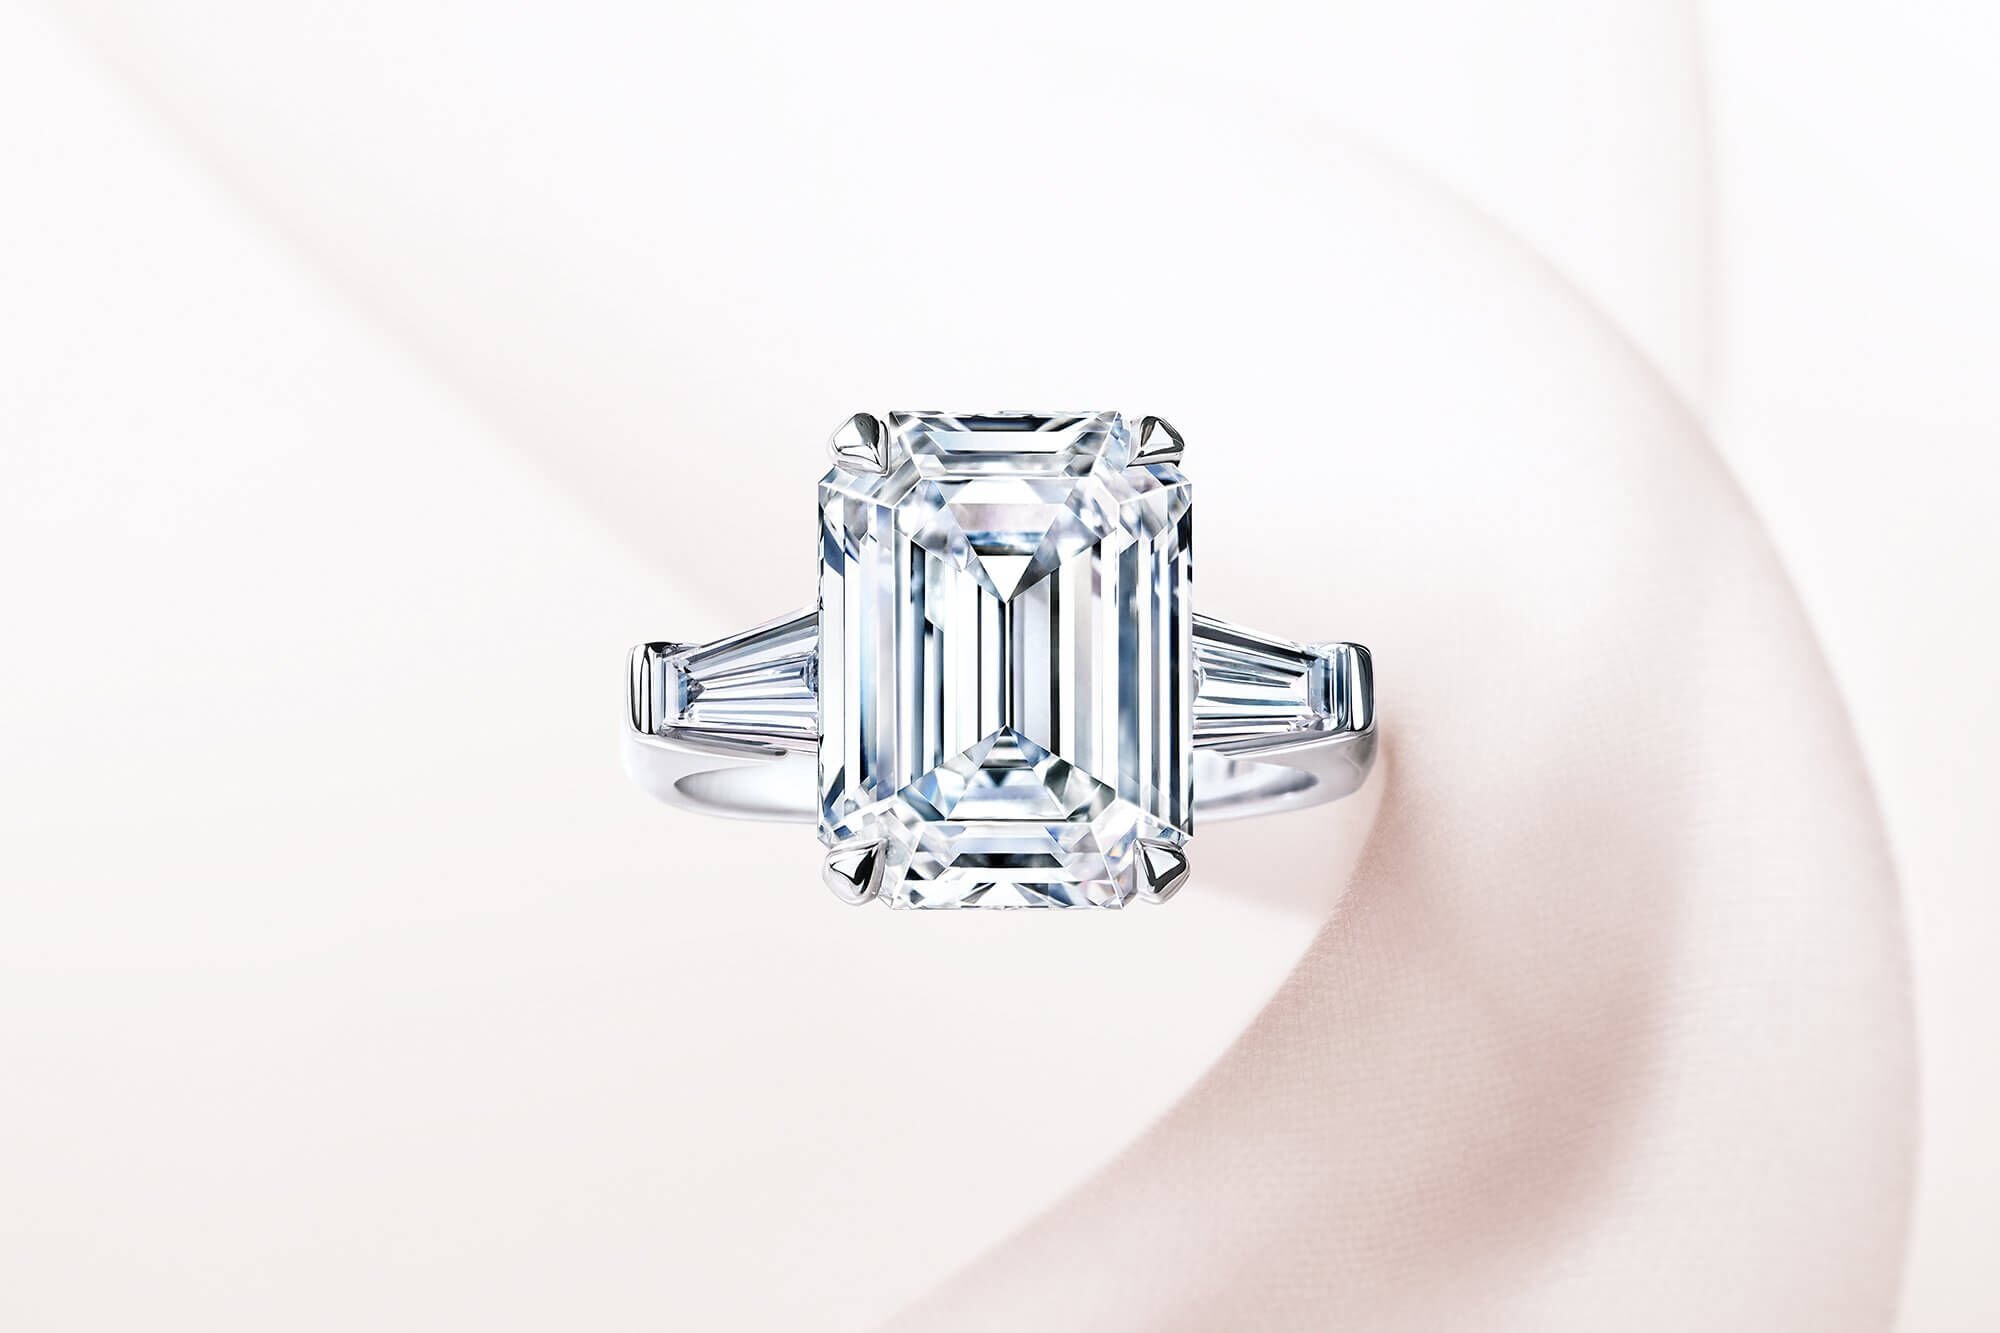 A Graff emerald cut diamond Promise setting engagement ring